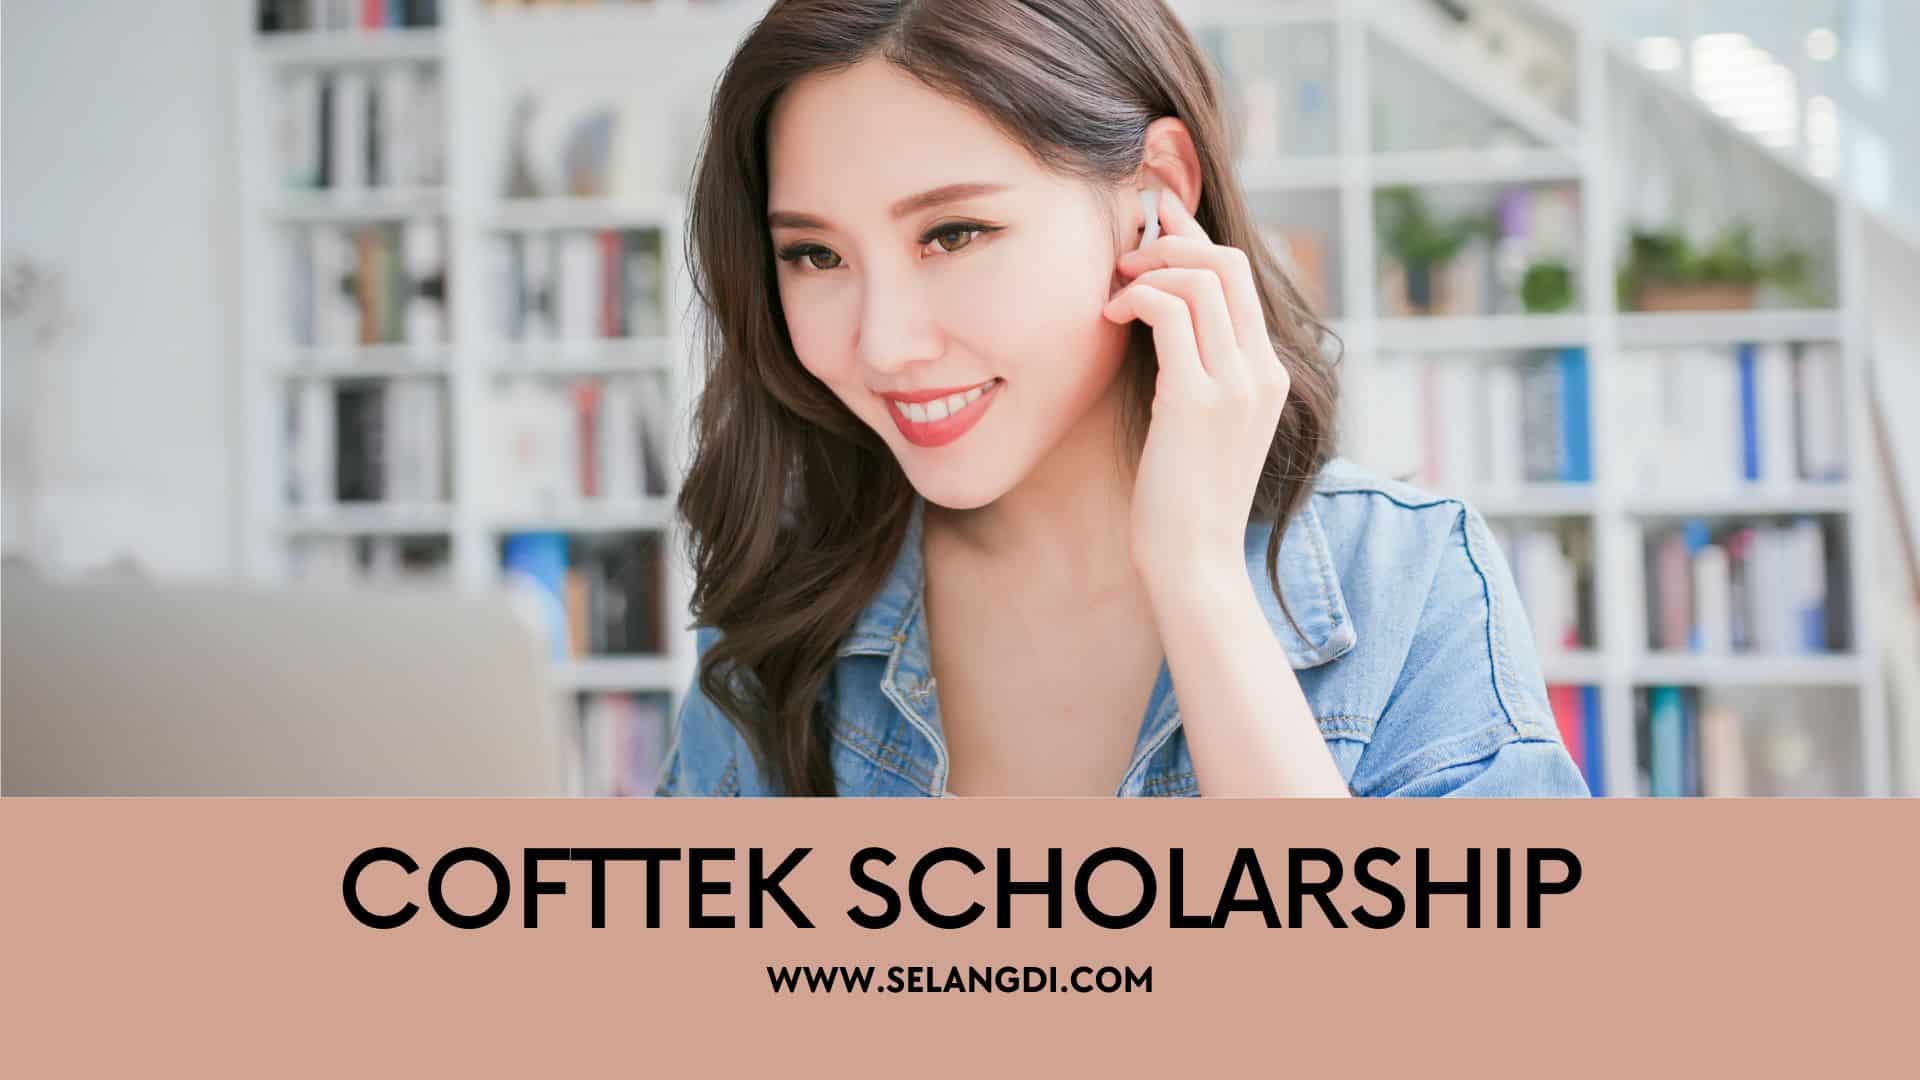 Apply Now: Cofttek Scholarship 2022